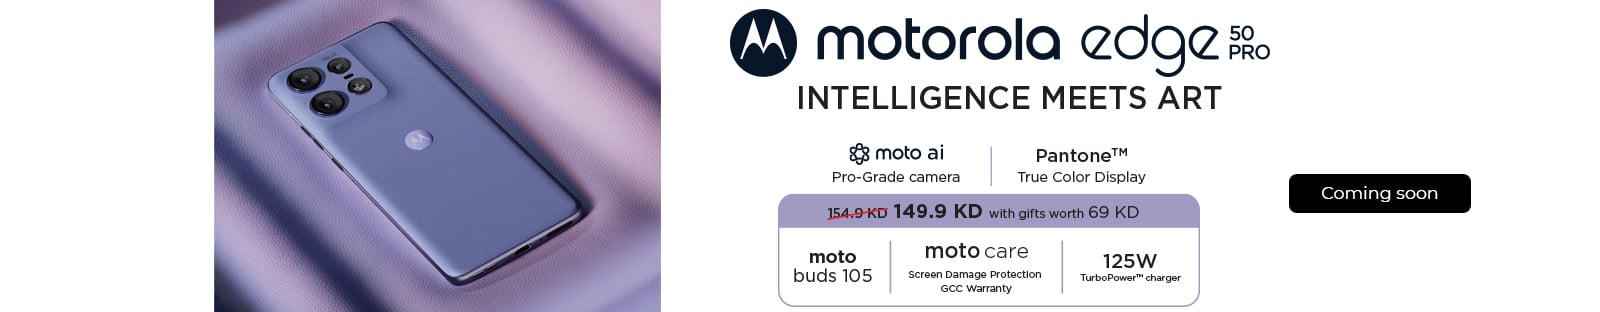 Motorola edge coming soon